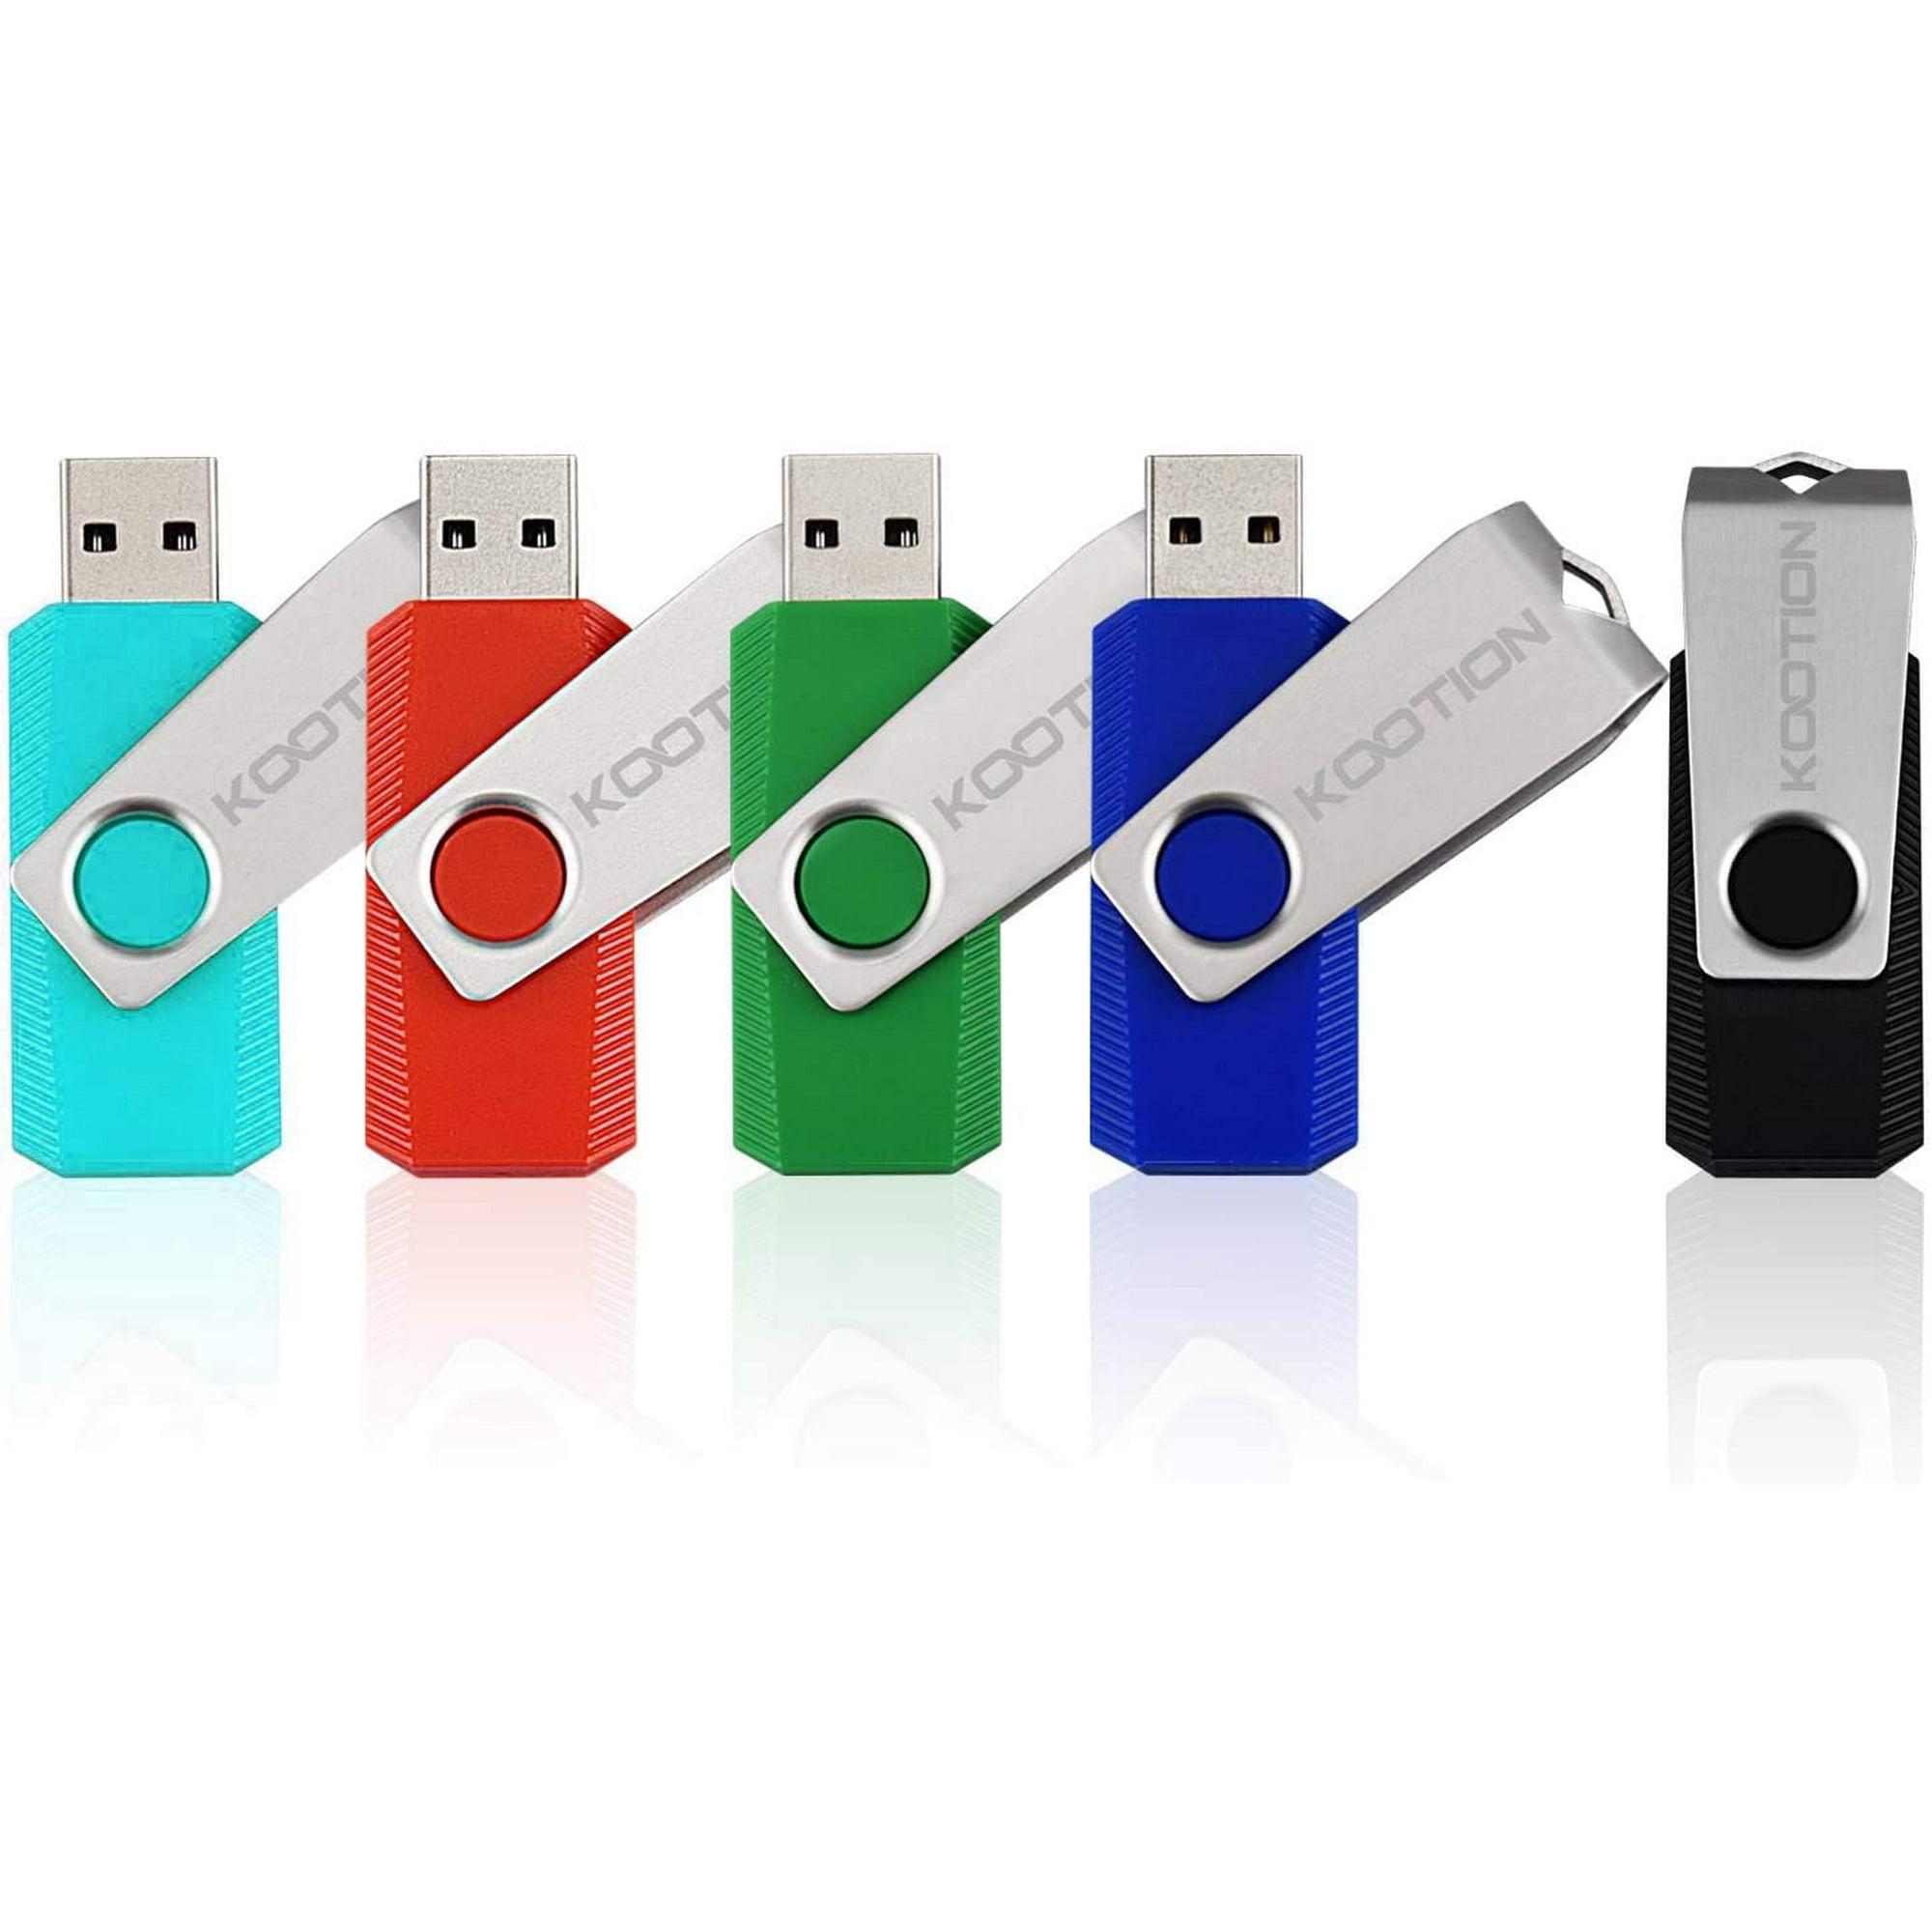 10 Pack Waterproof Key 16GB USB Flash Drive Flash Pen Drive Thumb Memory Stick